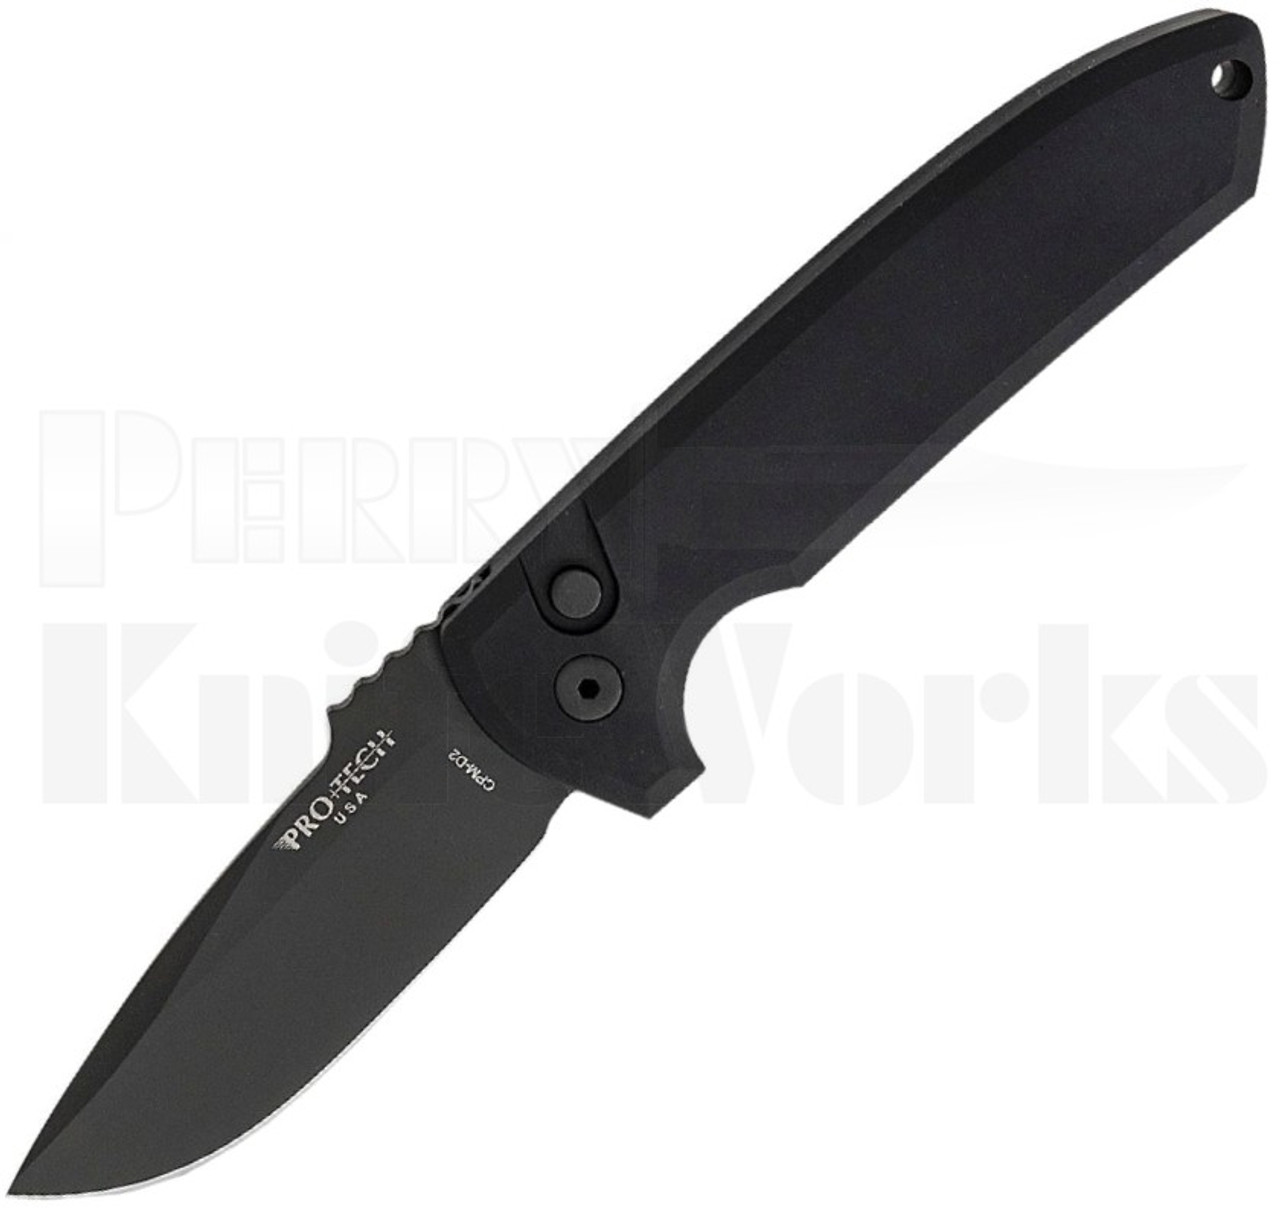 Pro-Tech Rockeye Automatic Knife Black l LG303-D2 l For Sale